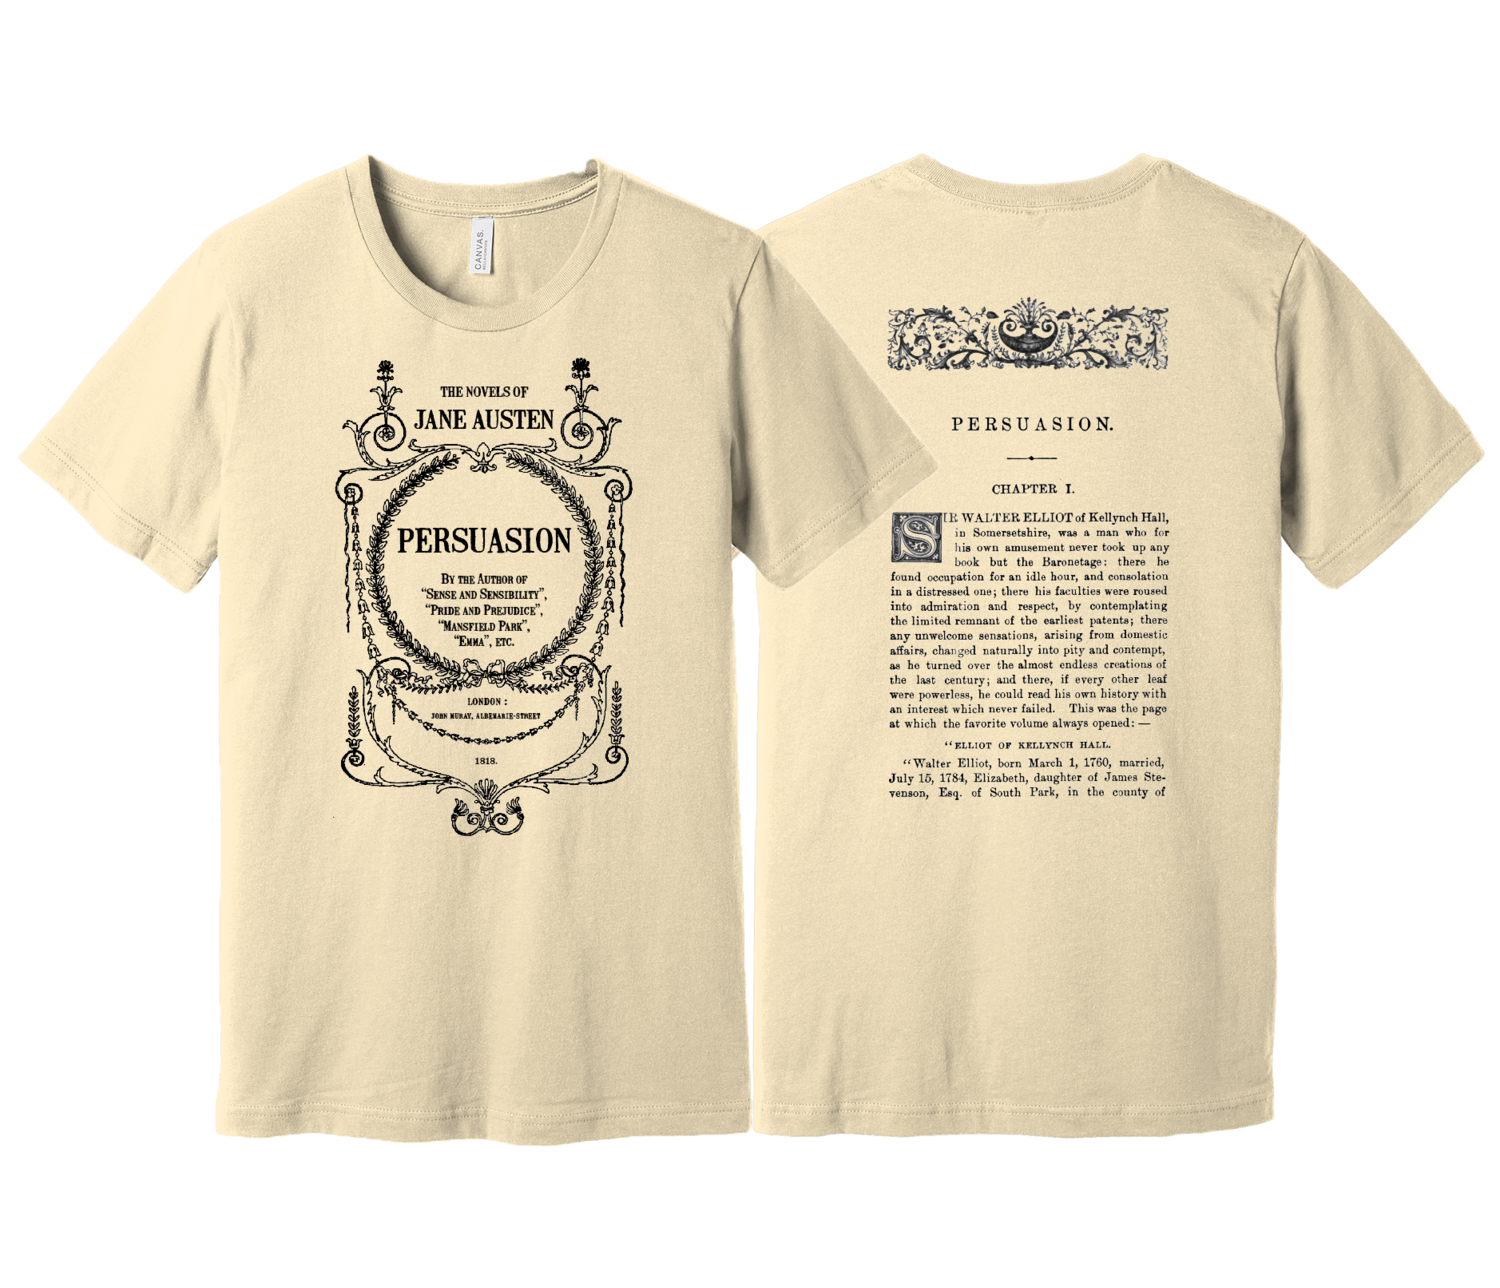 Persuasion by Jane Austen Shirt